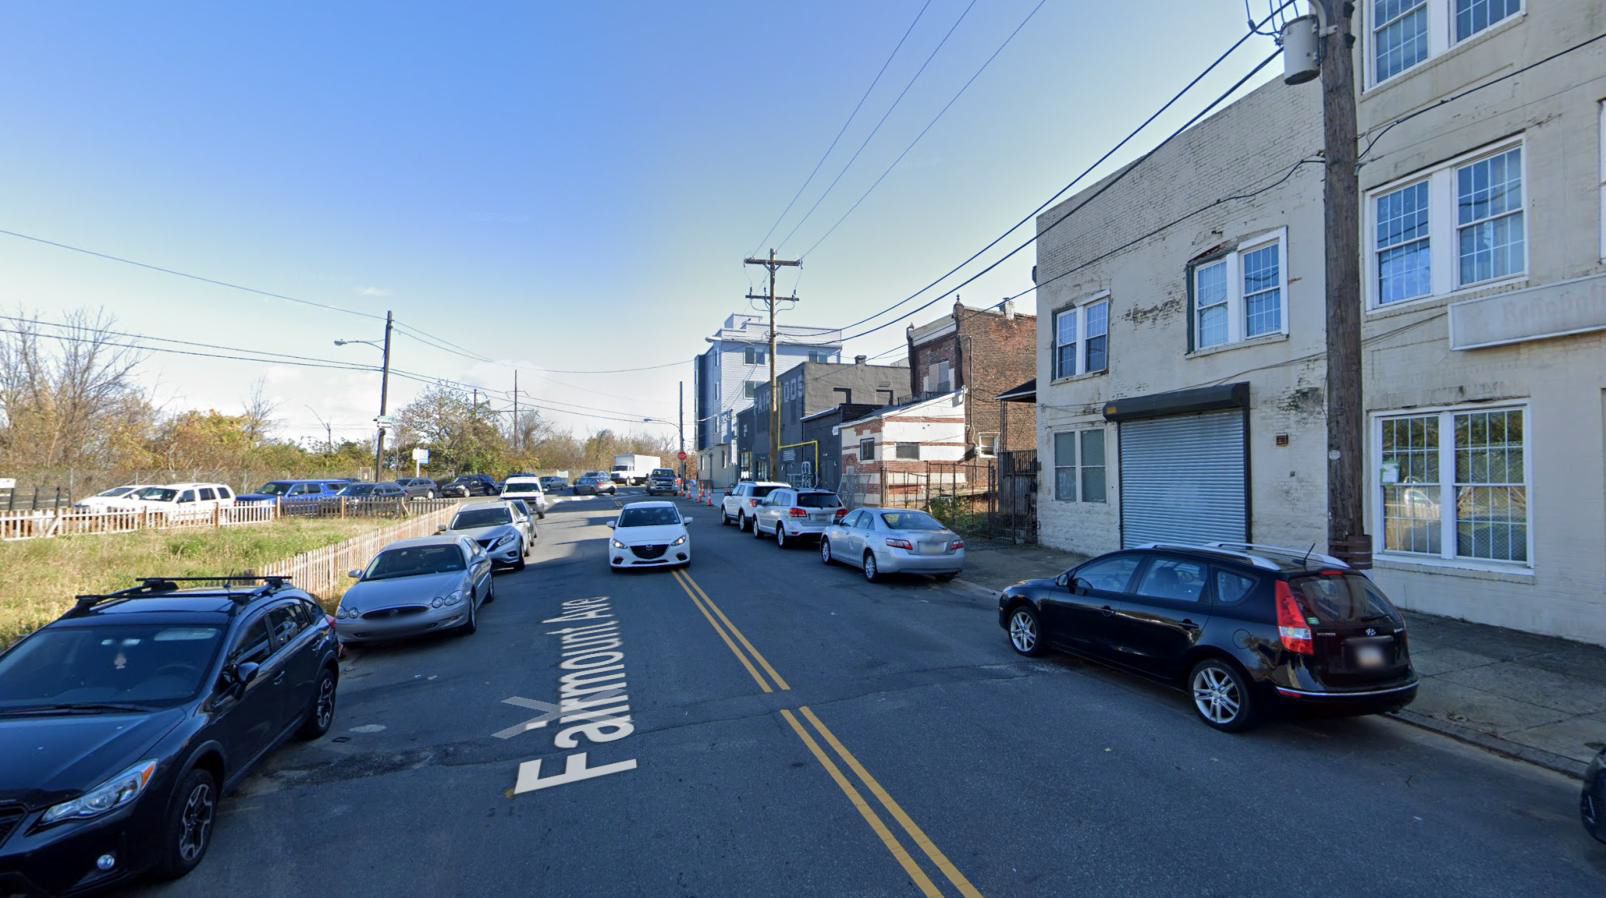 3308 Fairmount Avenue. Zoning table. Credit: Google Maps via Haverford Square Designs via the City of Philadelphia